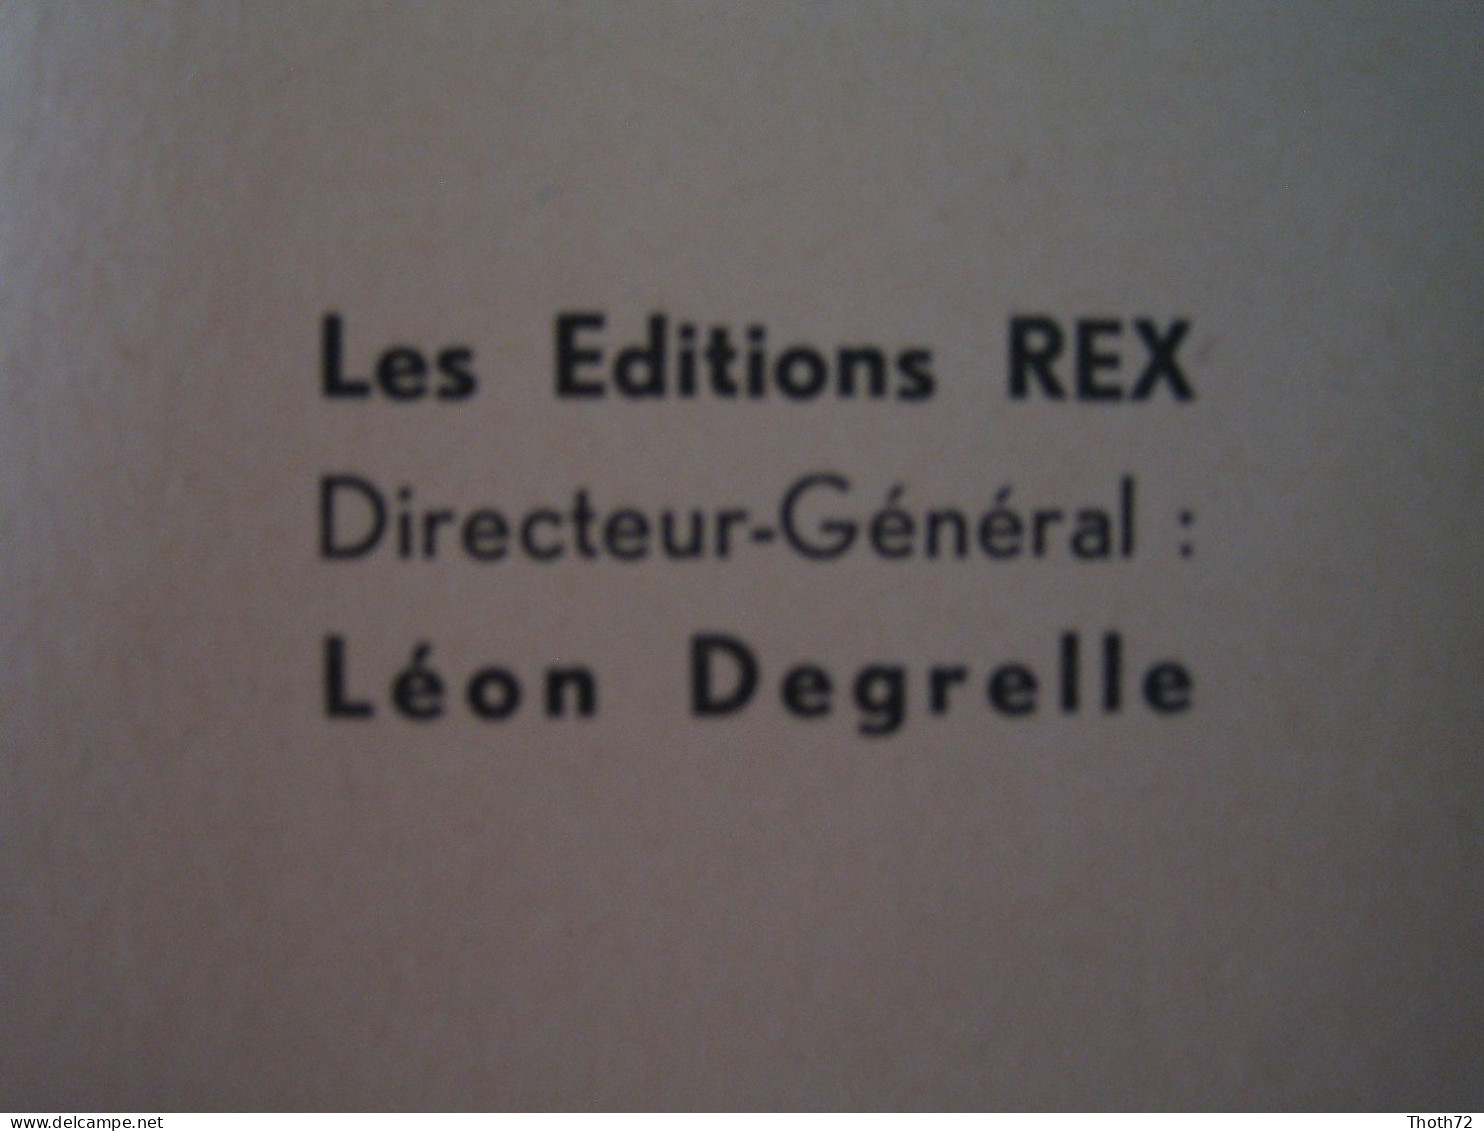 LE ROI ALBERT. Pierre NOTHOMB. 1934 Editions REX Léon DEGRELLE.